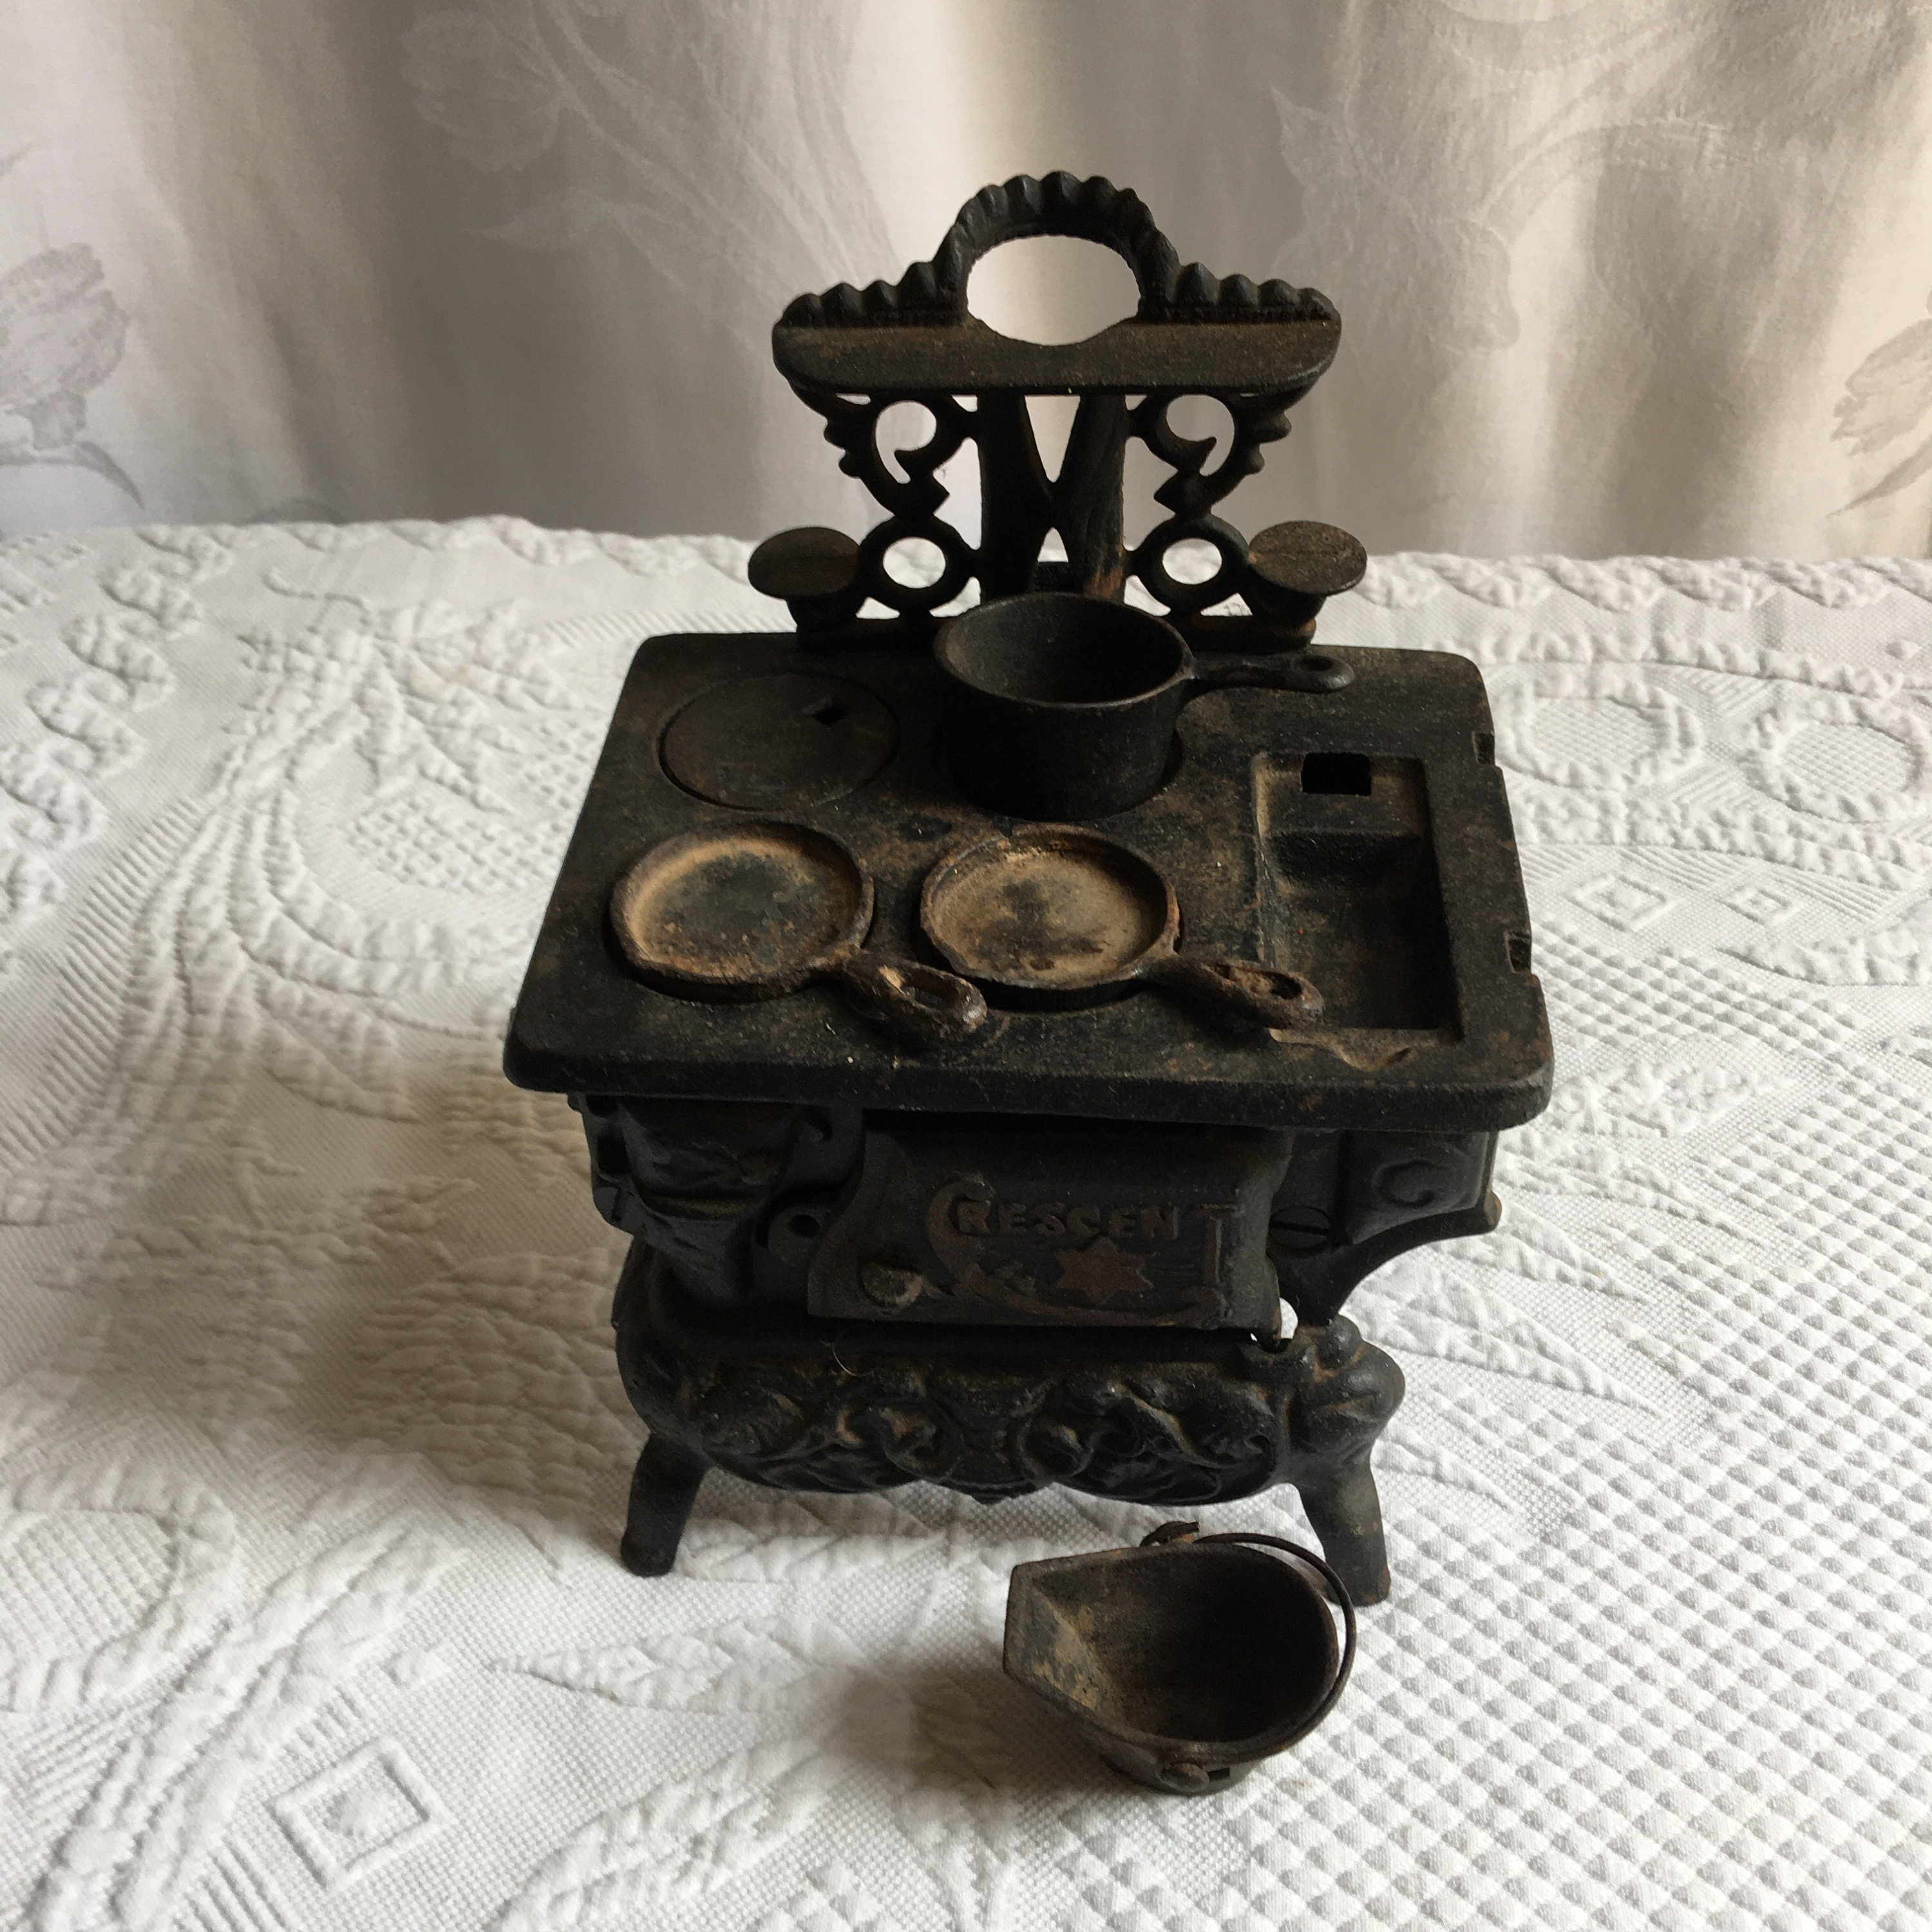 Dollhouse Miniature Antique Cast Iron StoveMini Furniture Model Iron Stove Top Long Chimney